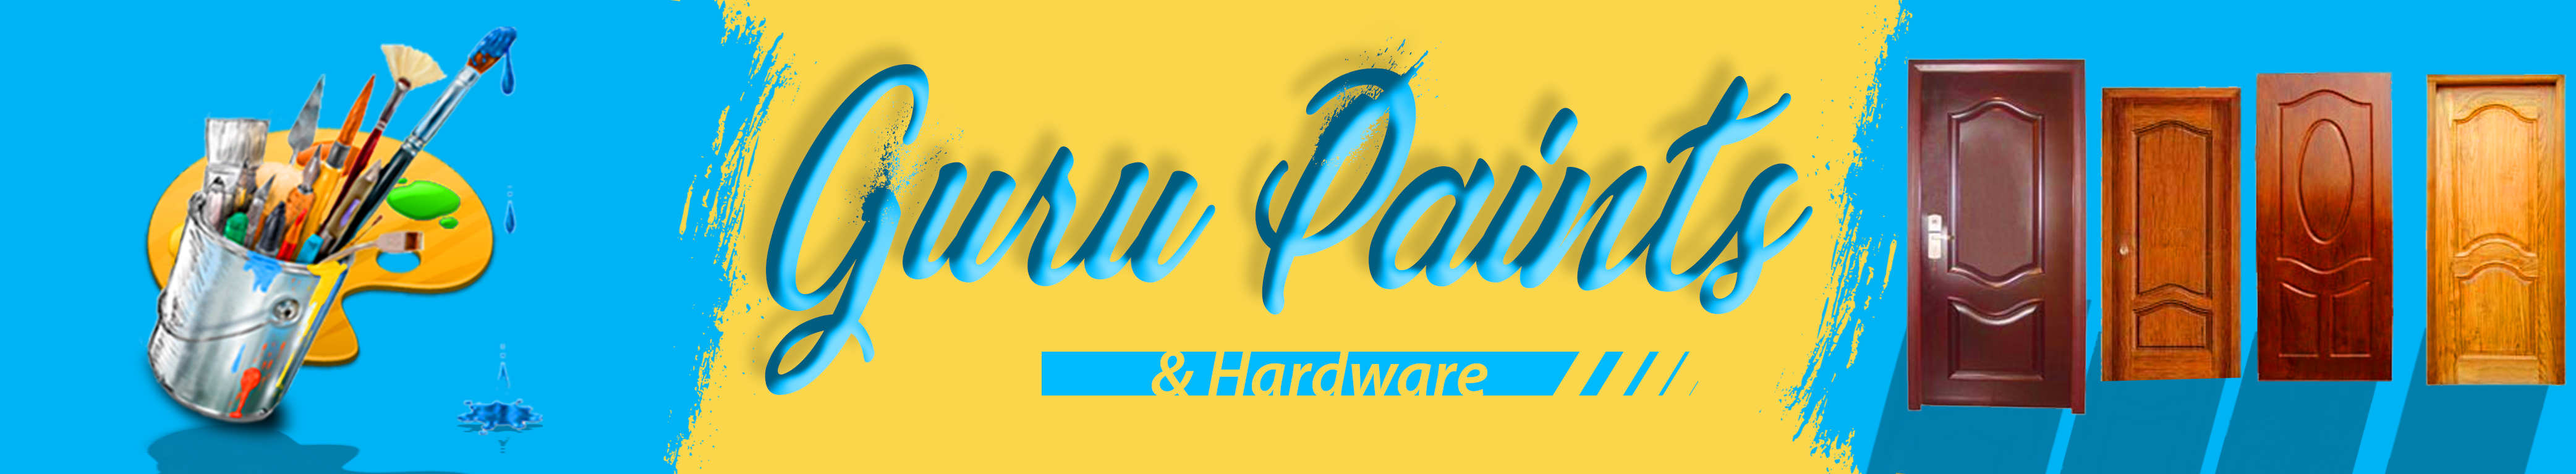 Guru Paints and Hardwares Banner Image